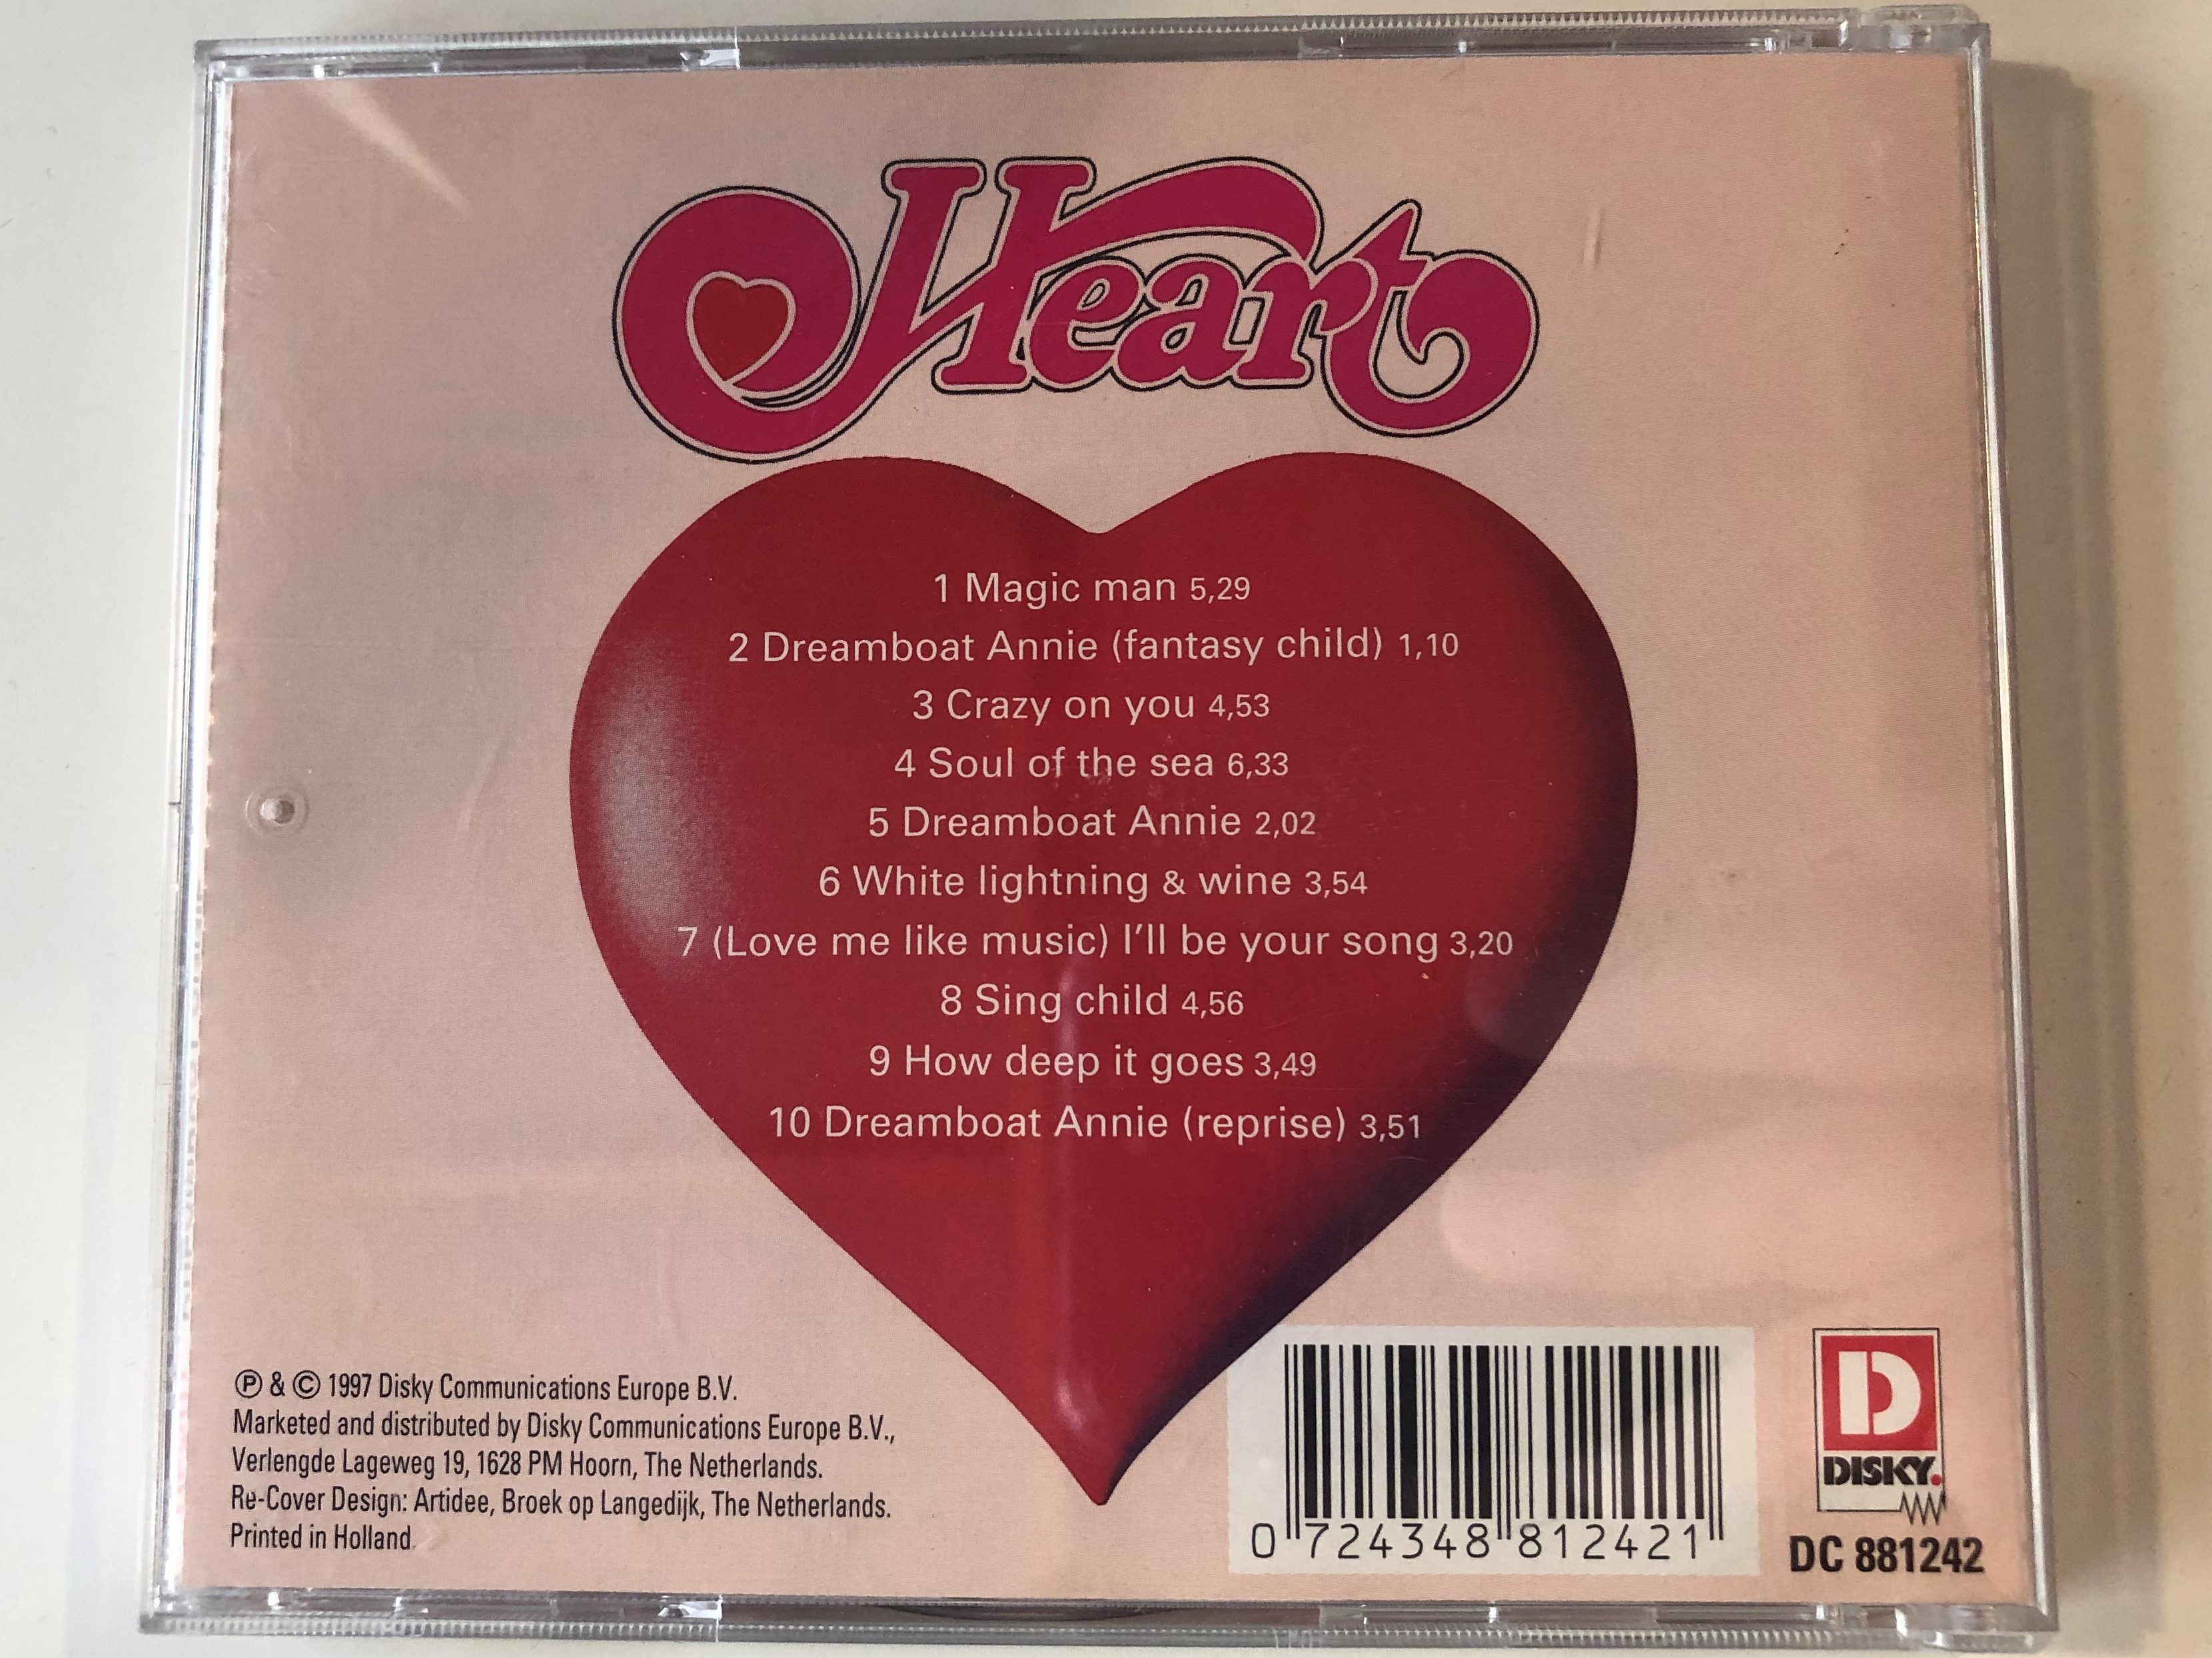 heart-dreamboat-annie-disky-audio-cd-1997-dc-881242-2-.jpg